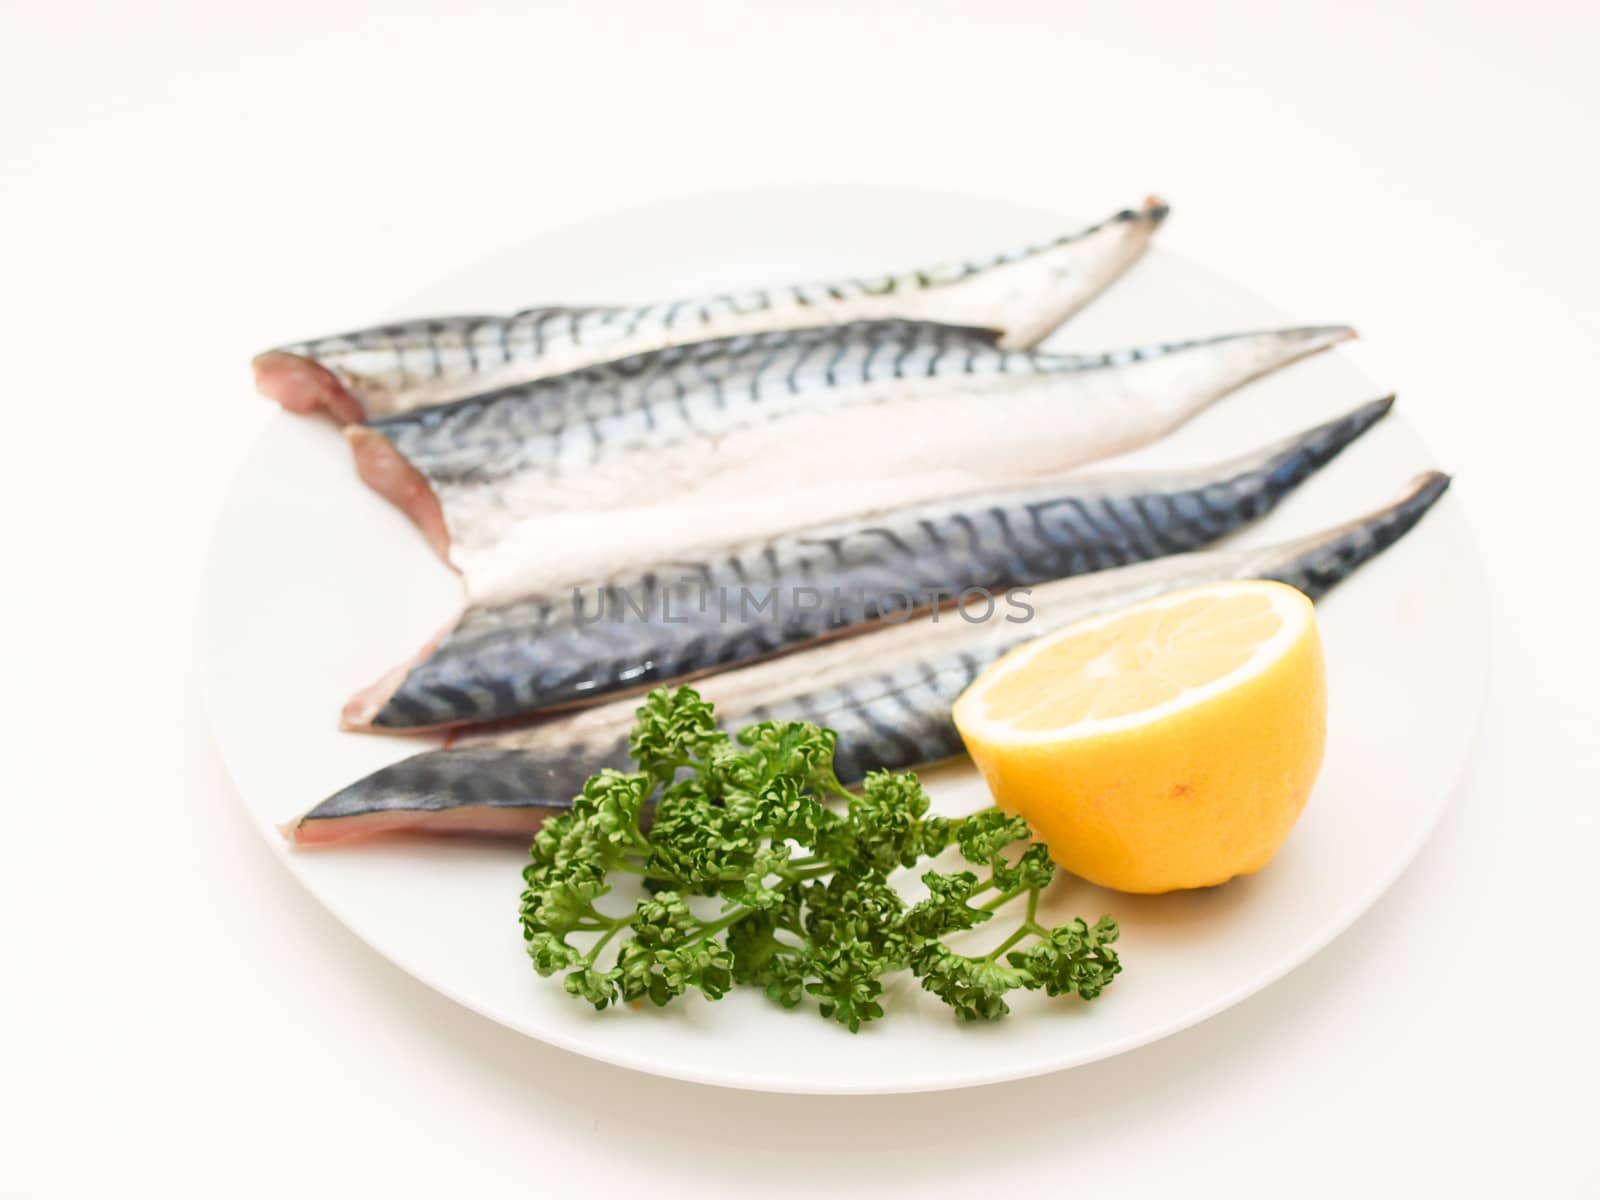 Raw mackerel fish filet by Arvebettum